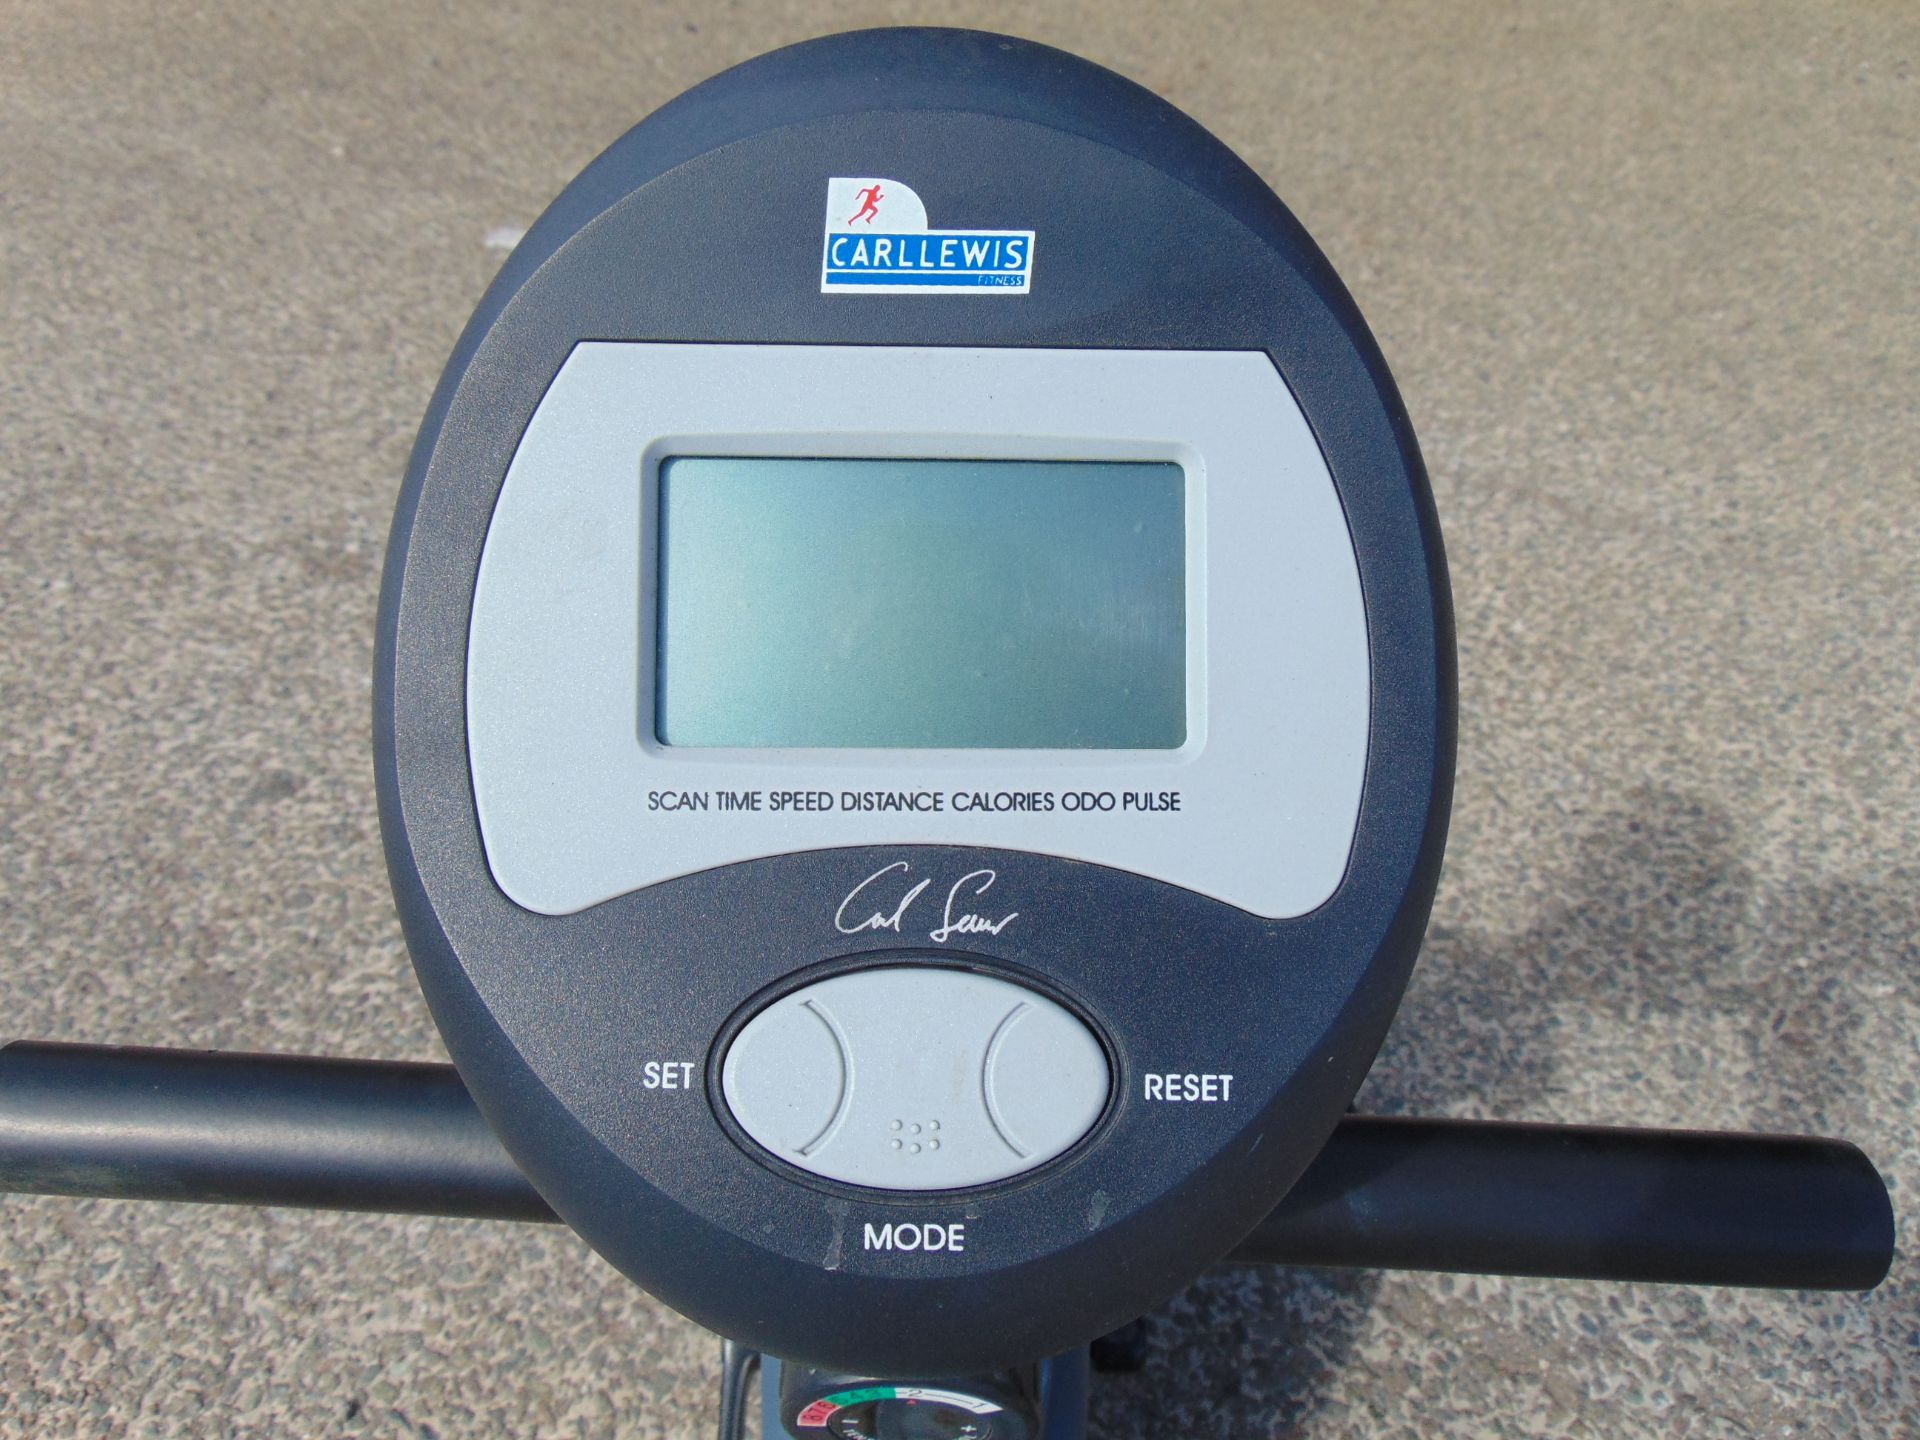 Carl Lewis EMR17 Magnetic Recumbent Exercise Bike - Image 7 of 9